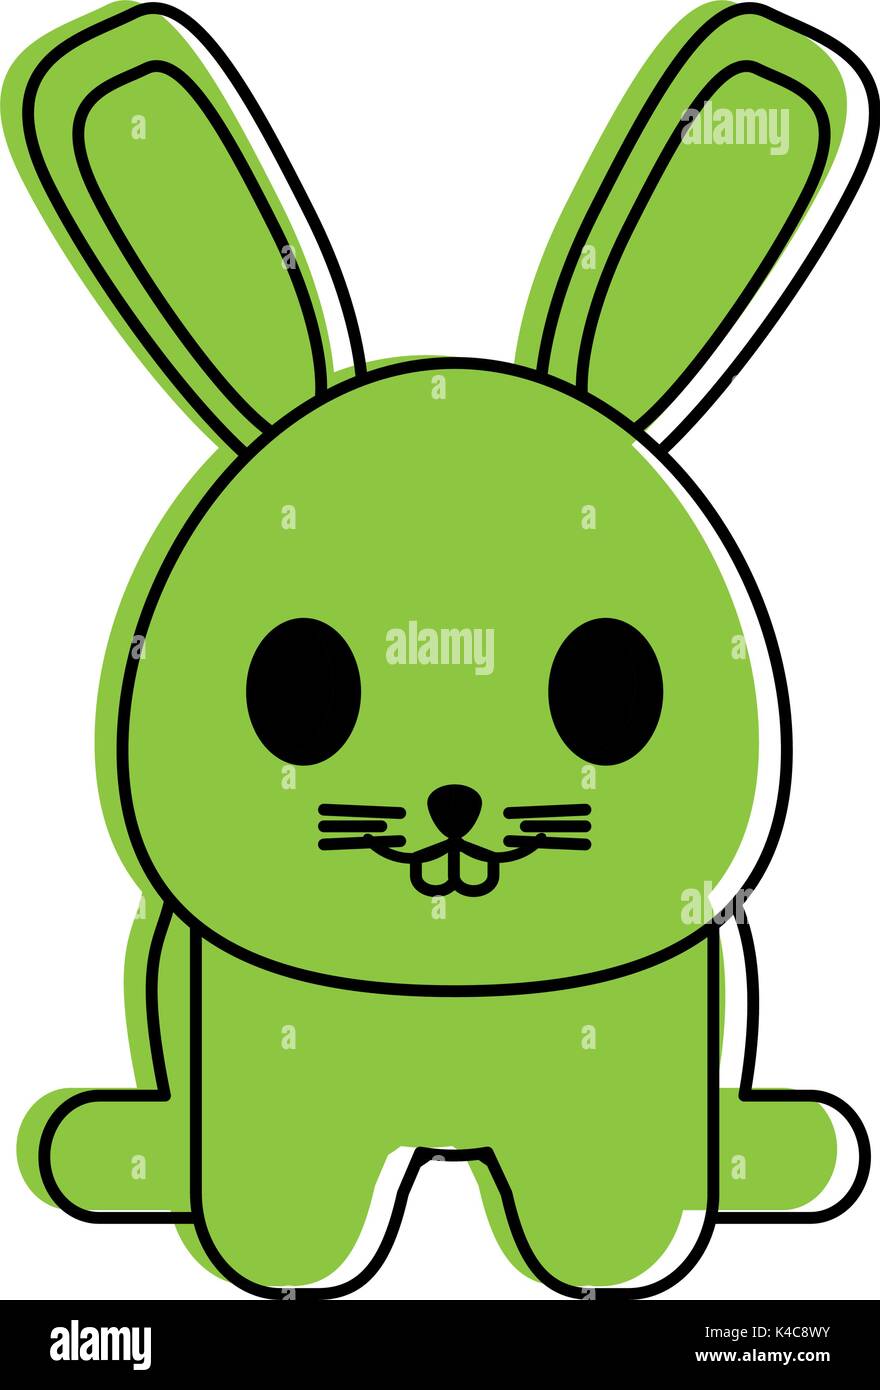 rabbit or bunny cute animal icon image  Stock Vector